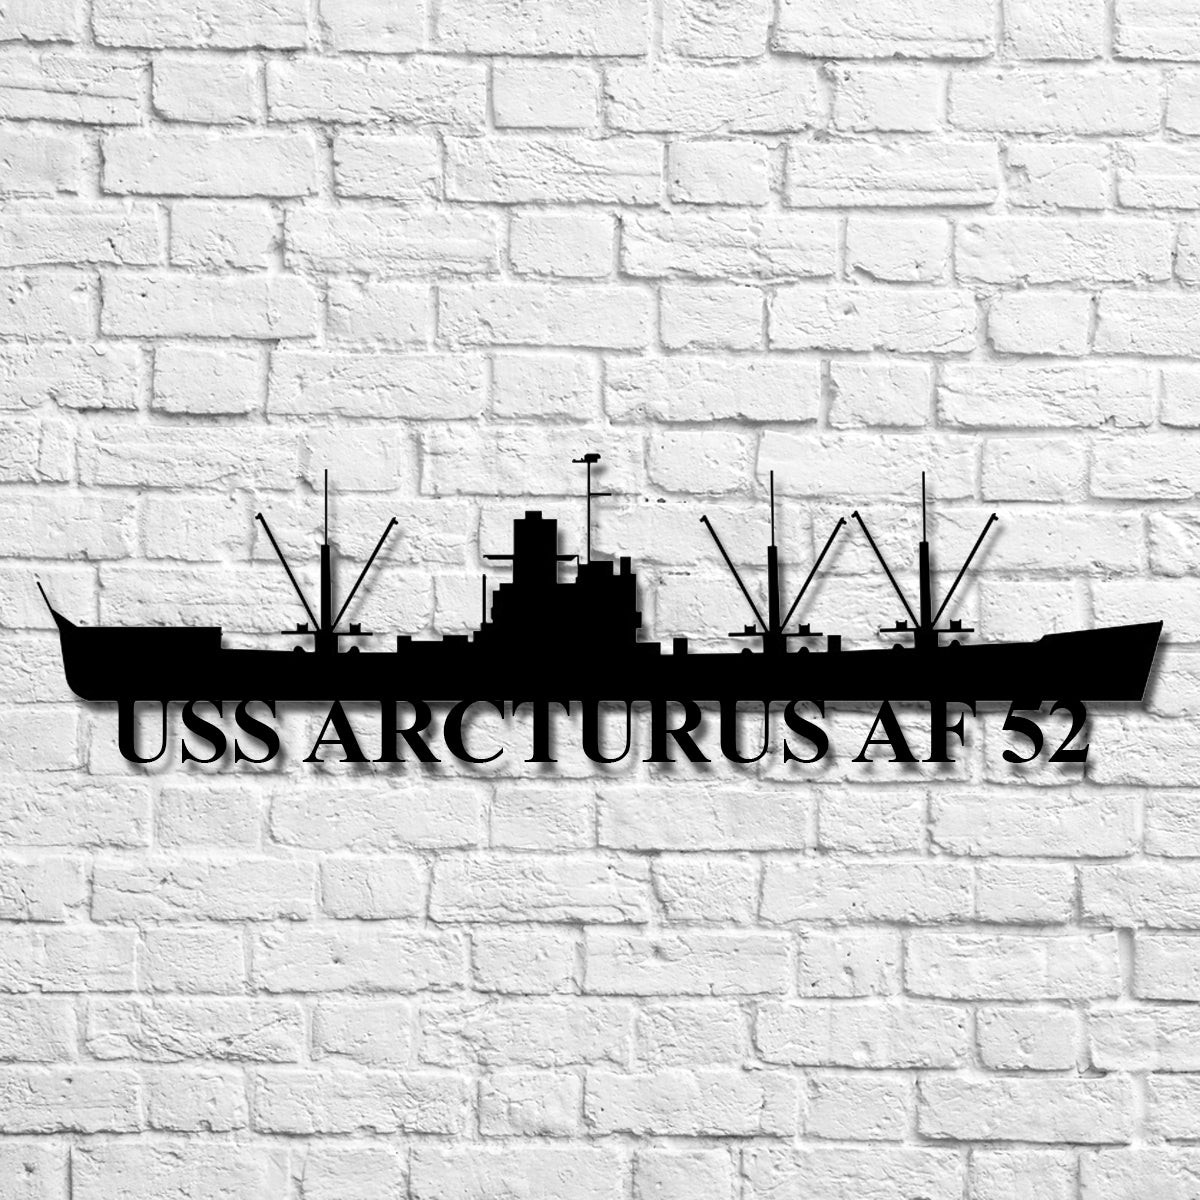 Uss Arcturus Af 52 Navy Ship Metal Art, Custom Us Navy Ship Cut Metal Sign, Gift For Navy Veteran, Navy Ships Silhouette Metal Art, Navy Home Decor Laser Cut Metal Signs Custom Gift Ideas 12x12IN